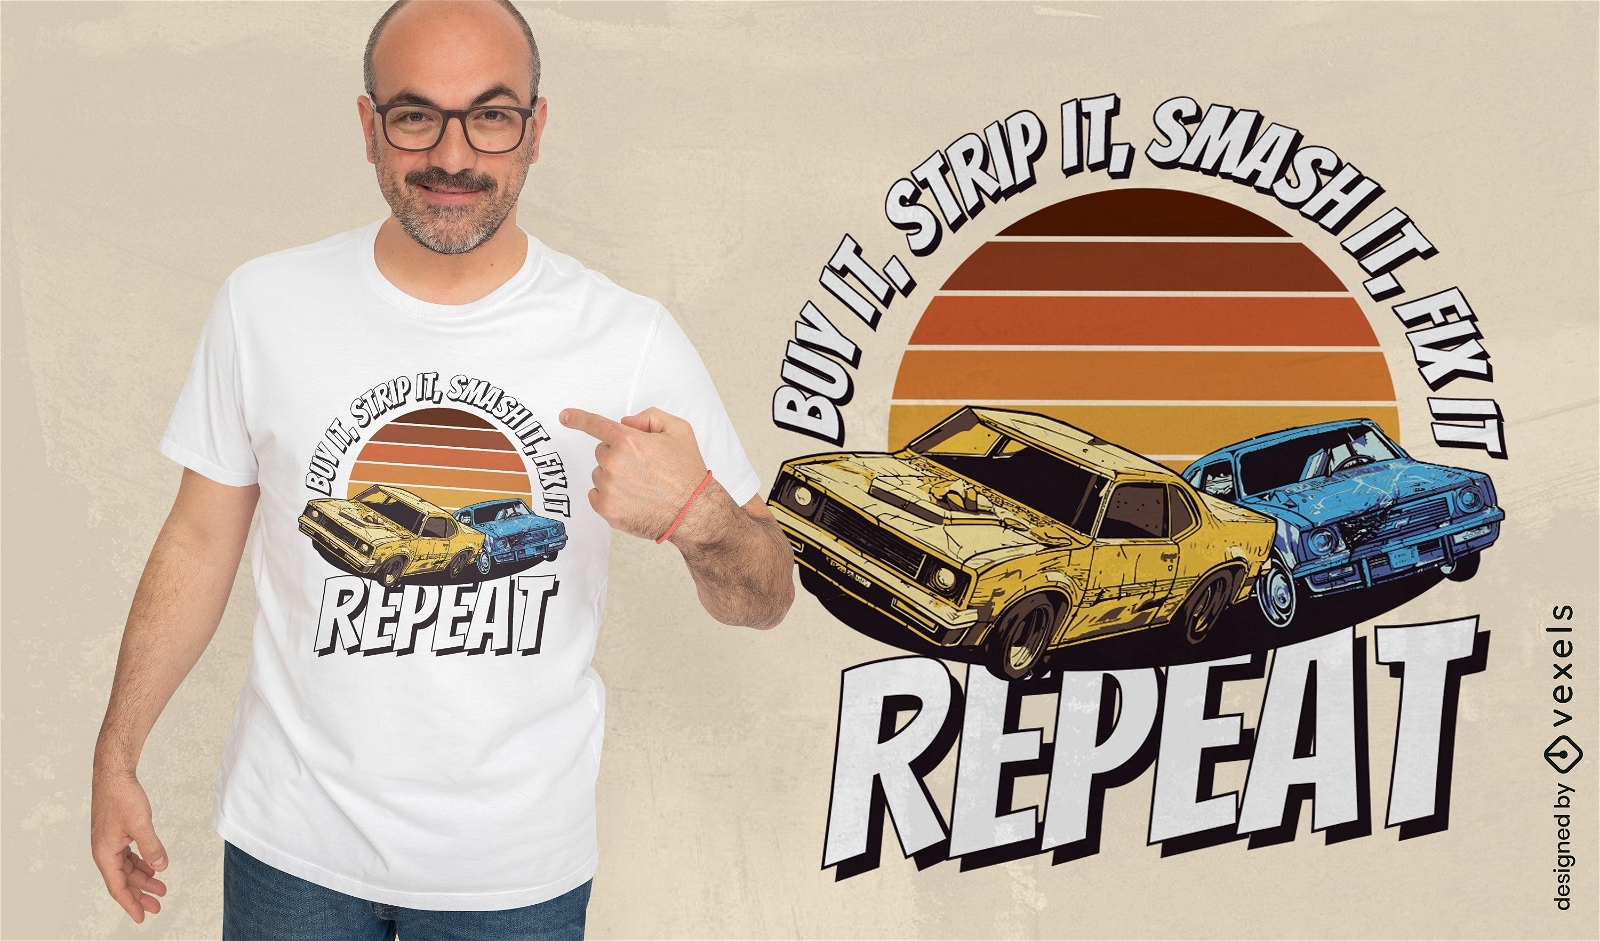 Retro car mechanic work t-shirt design